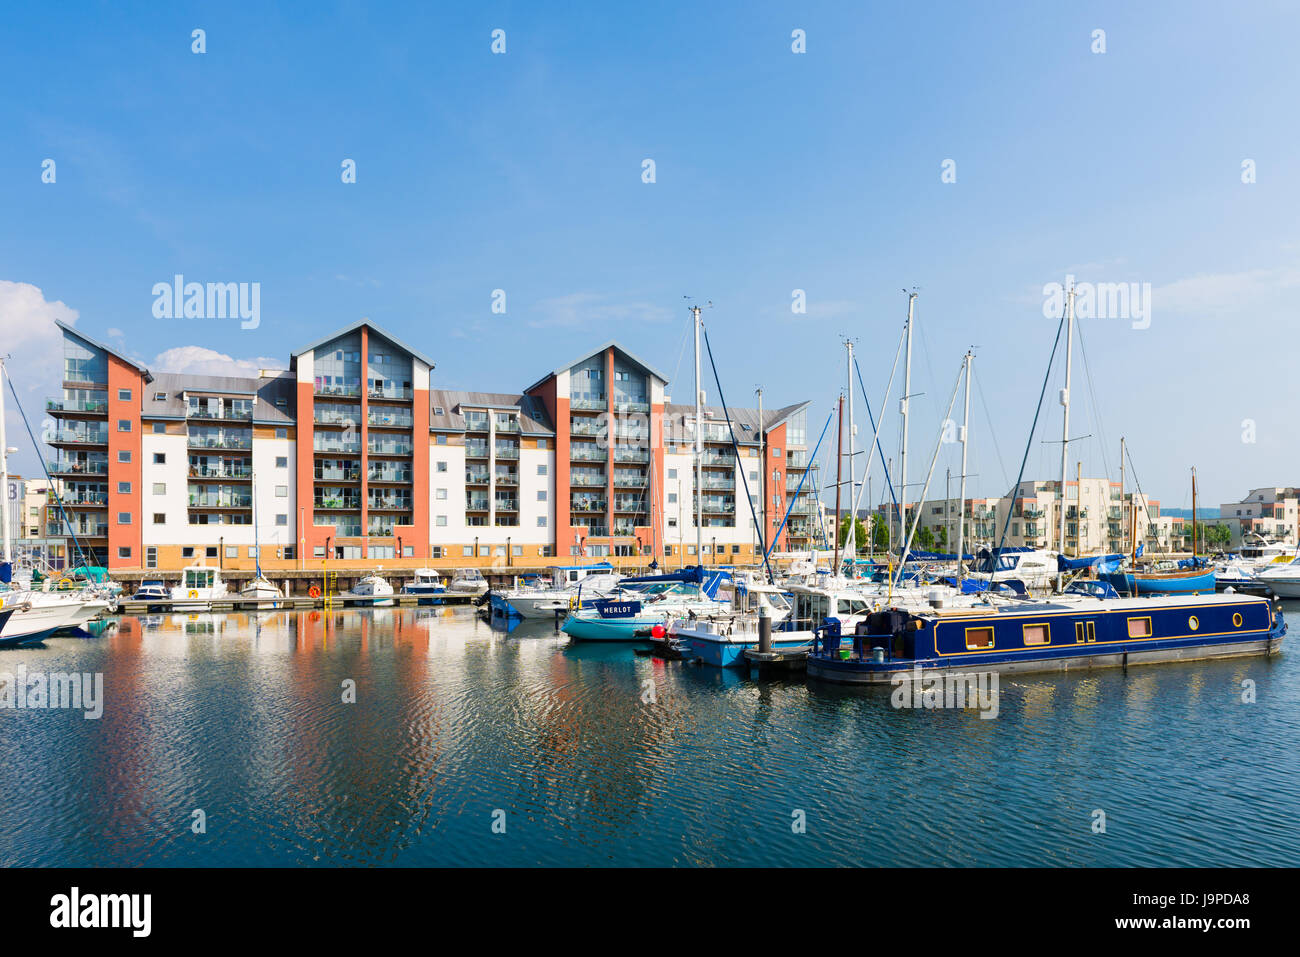 Boats and apartments at Portishead Quays Marina, North Somerset, England. Stock Photo